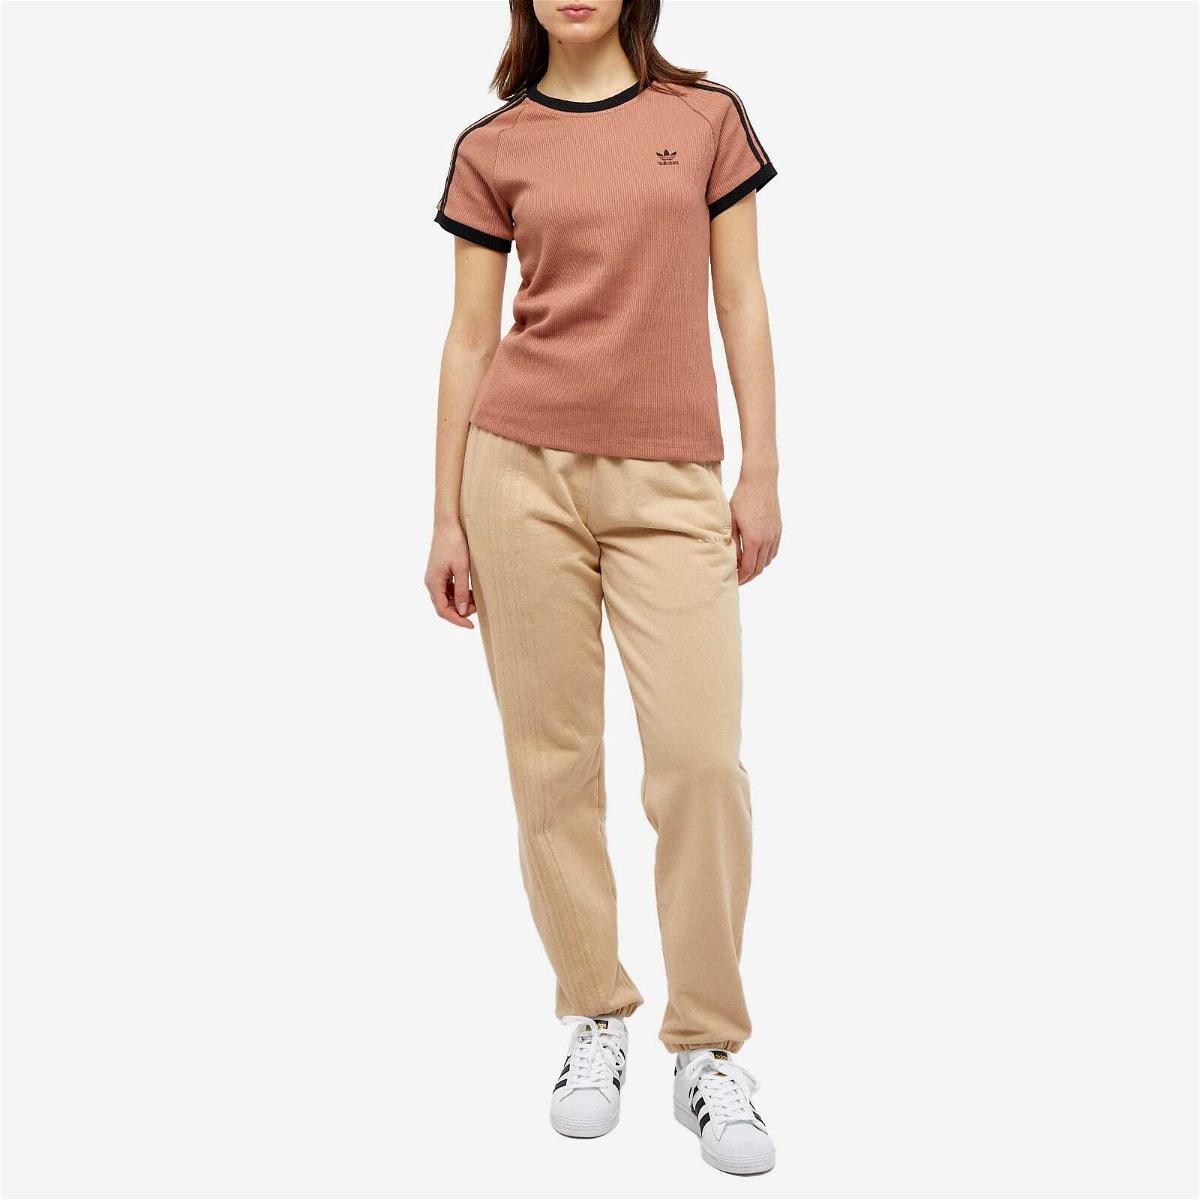 Clay Adidas Slim T-Shirt Women\'s 3-Stripe adidas in Strata